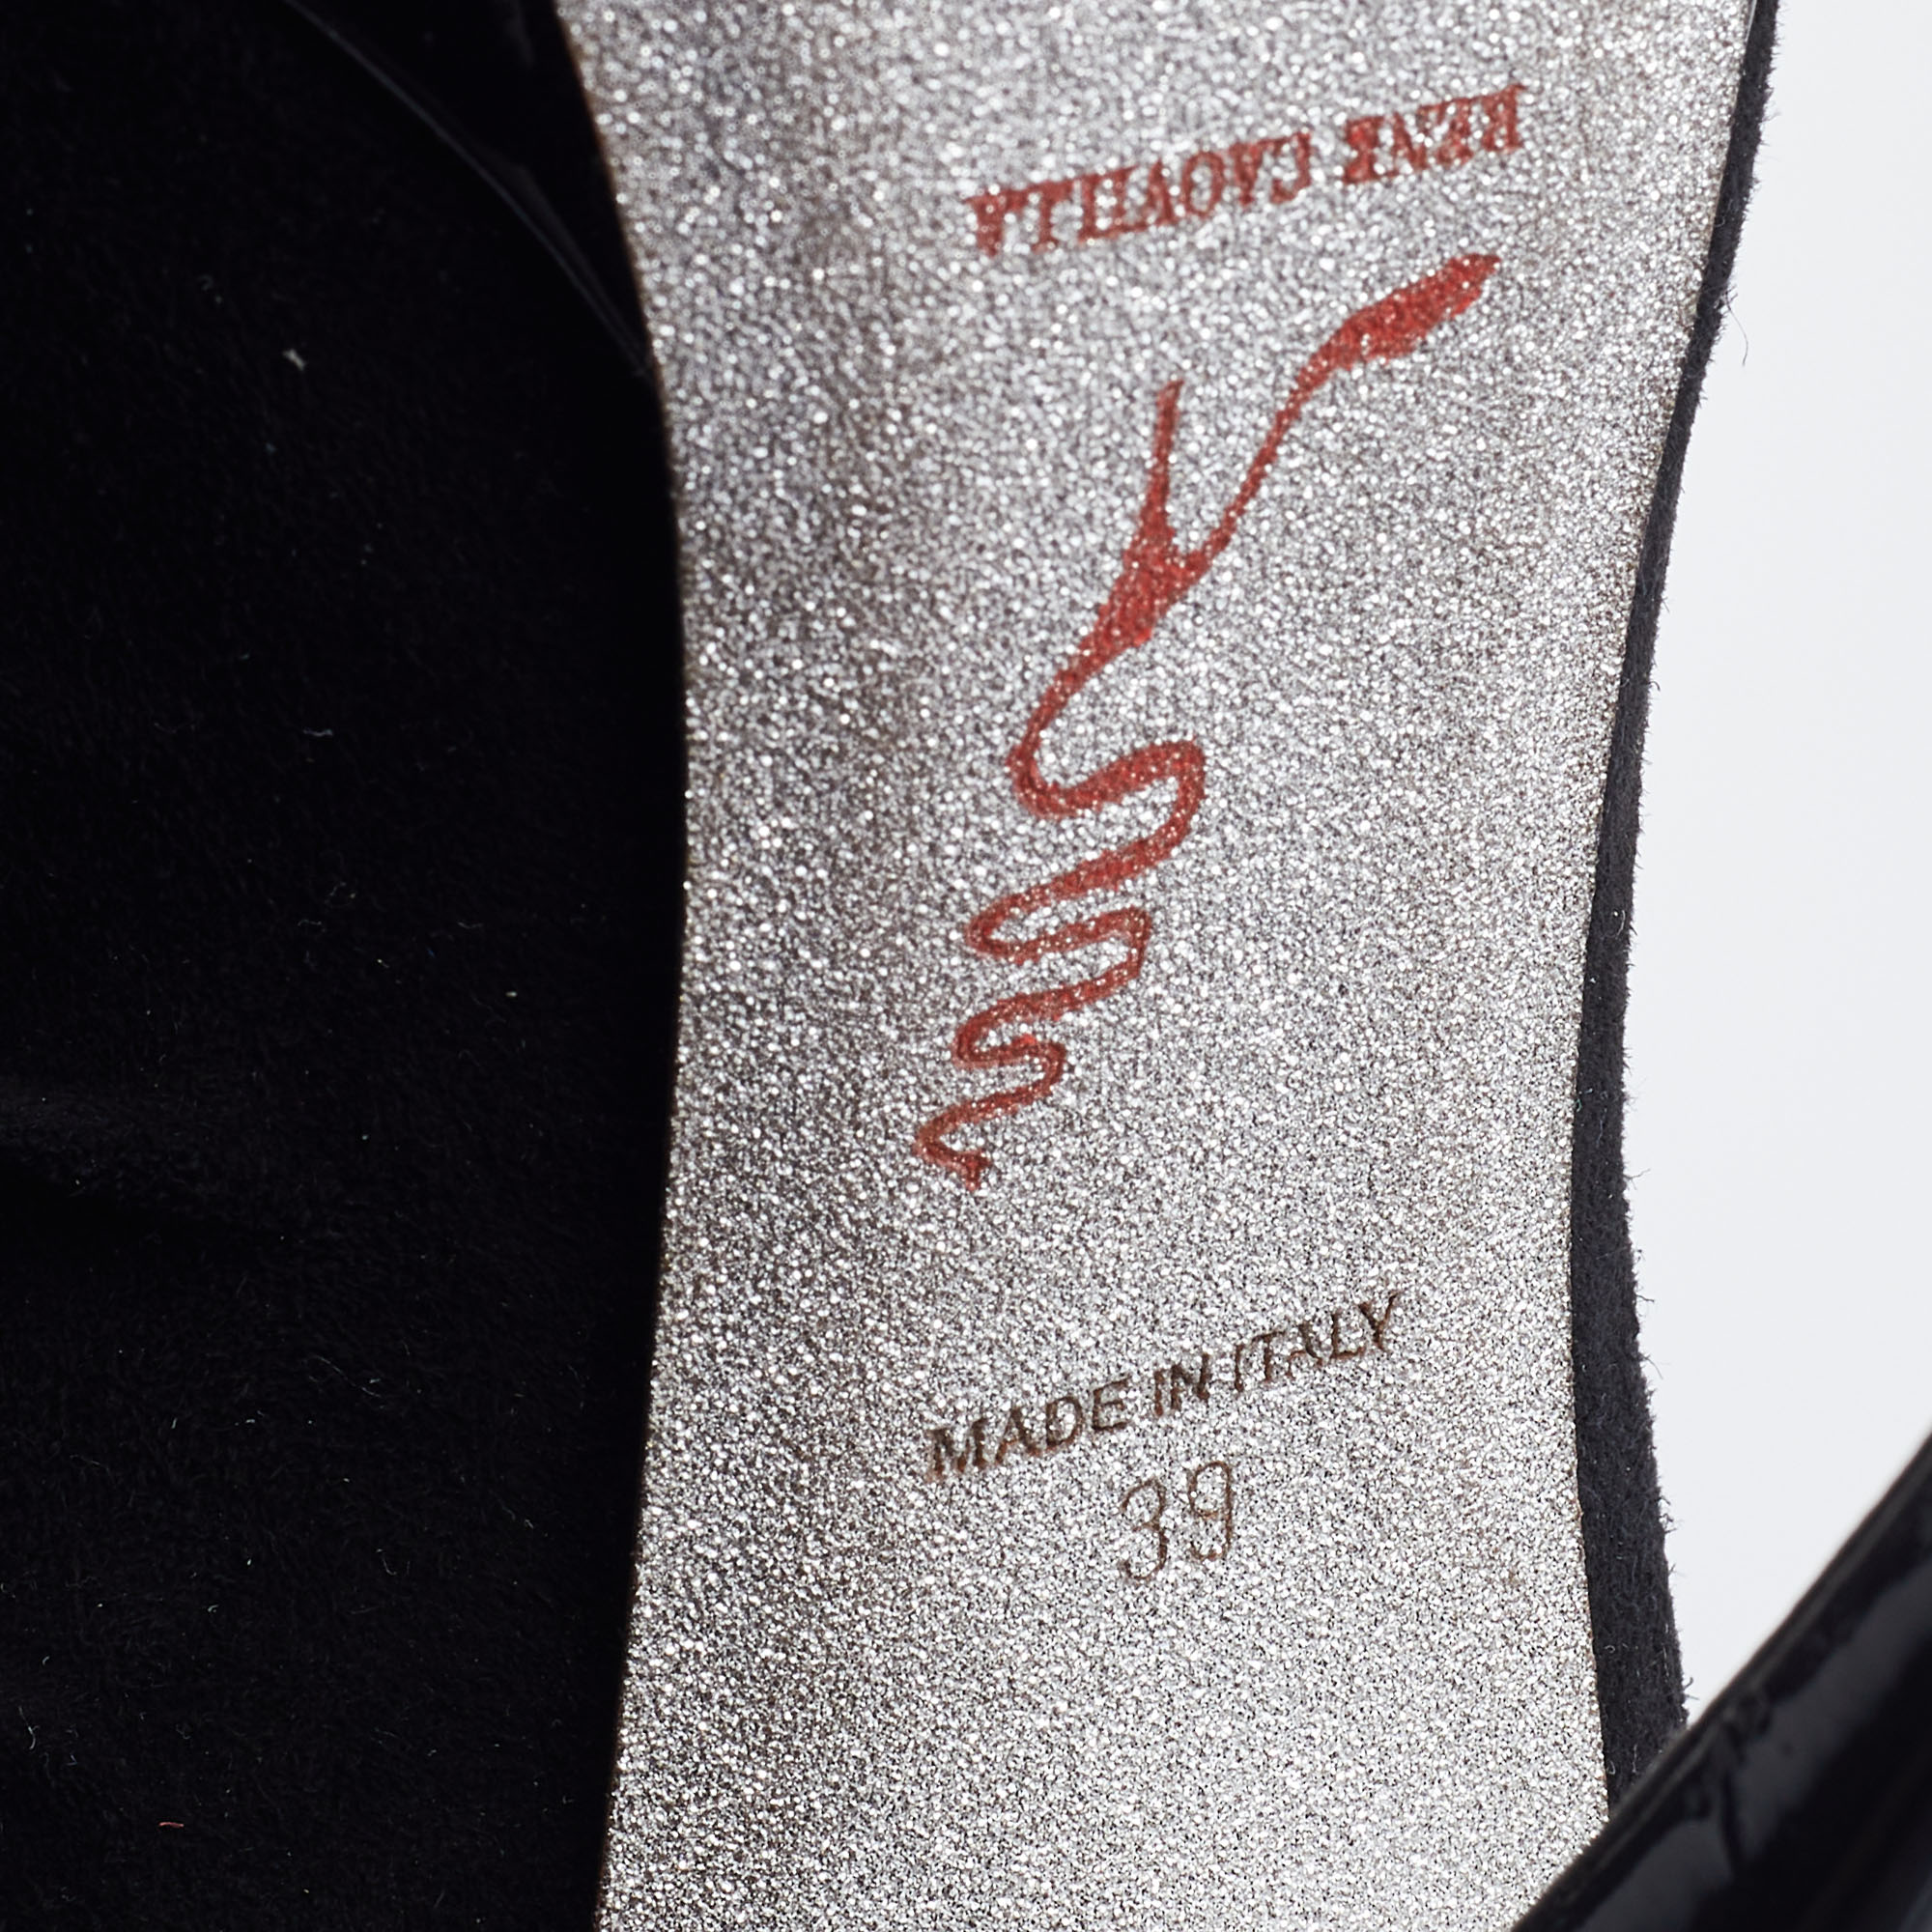 René Caovilla Black Suede Crystal Embellished Ankle Length Boots Size 39